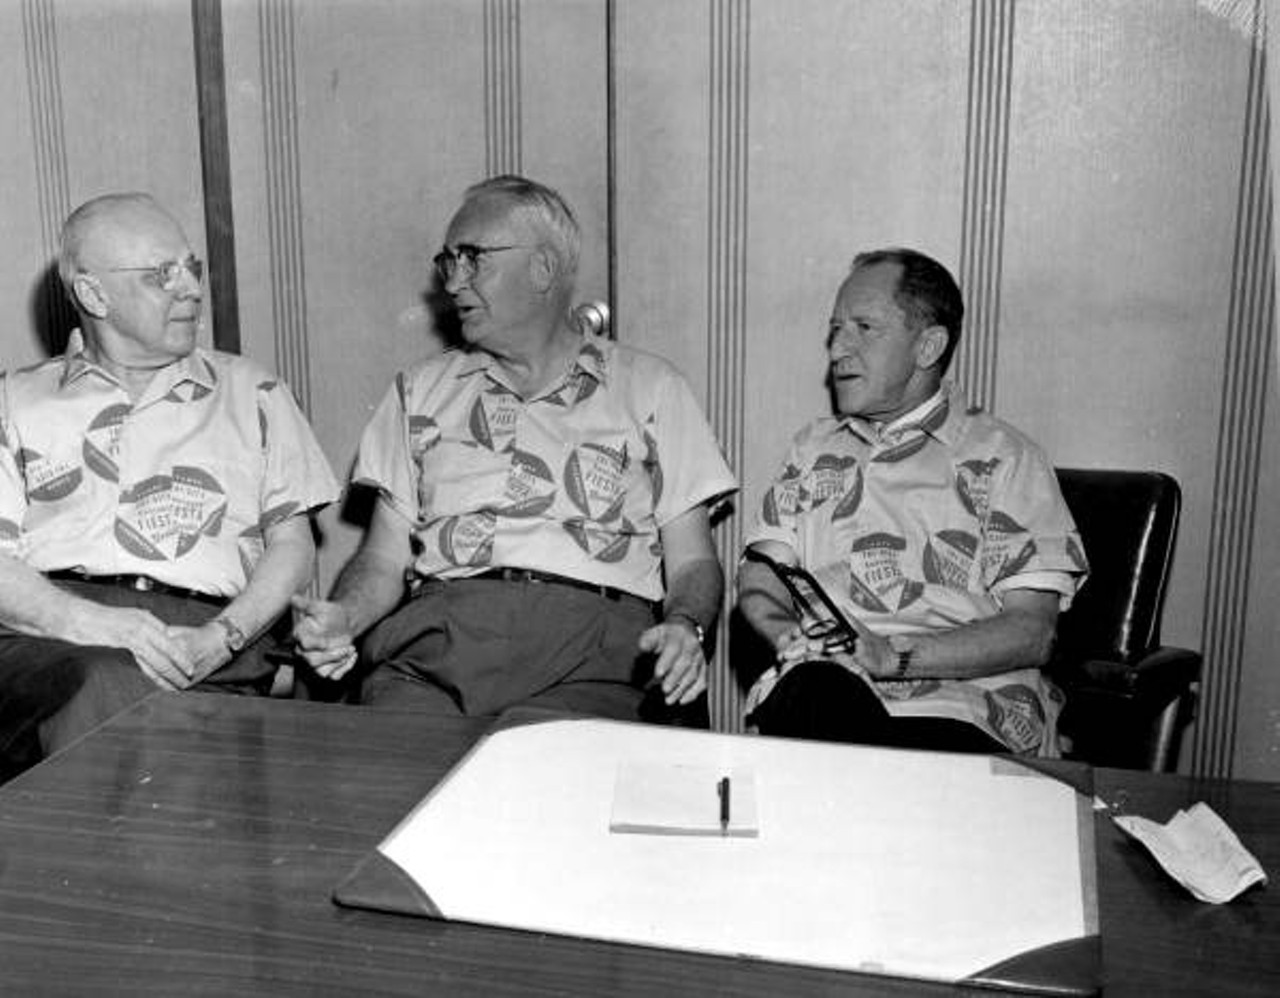 Founders of Webb's City department store - Saint Petersburg, Florida. From L to R: Mr. Bunie Webb, Bill Jones, and James Earl "Doc" Webb. 1961.